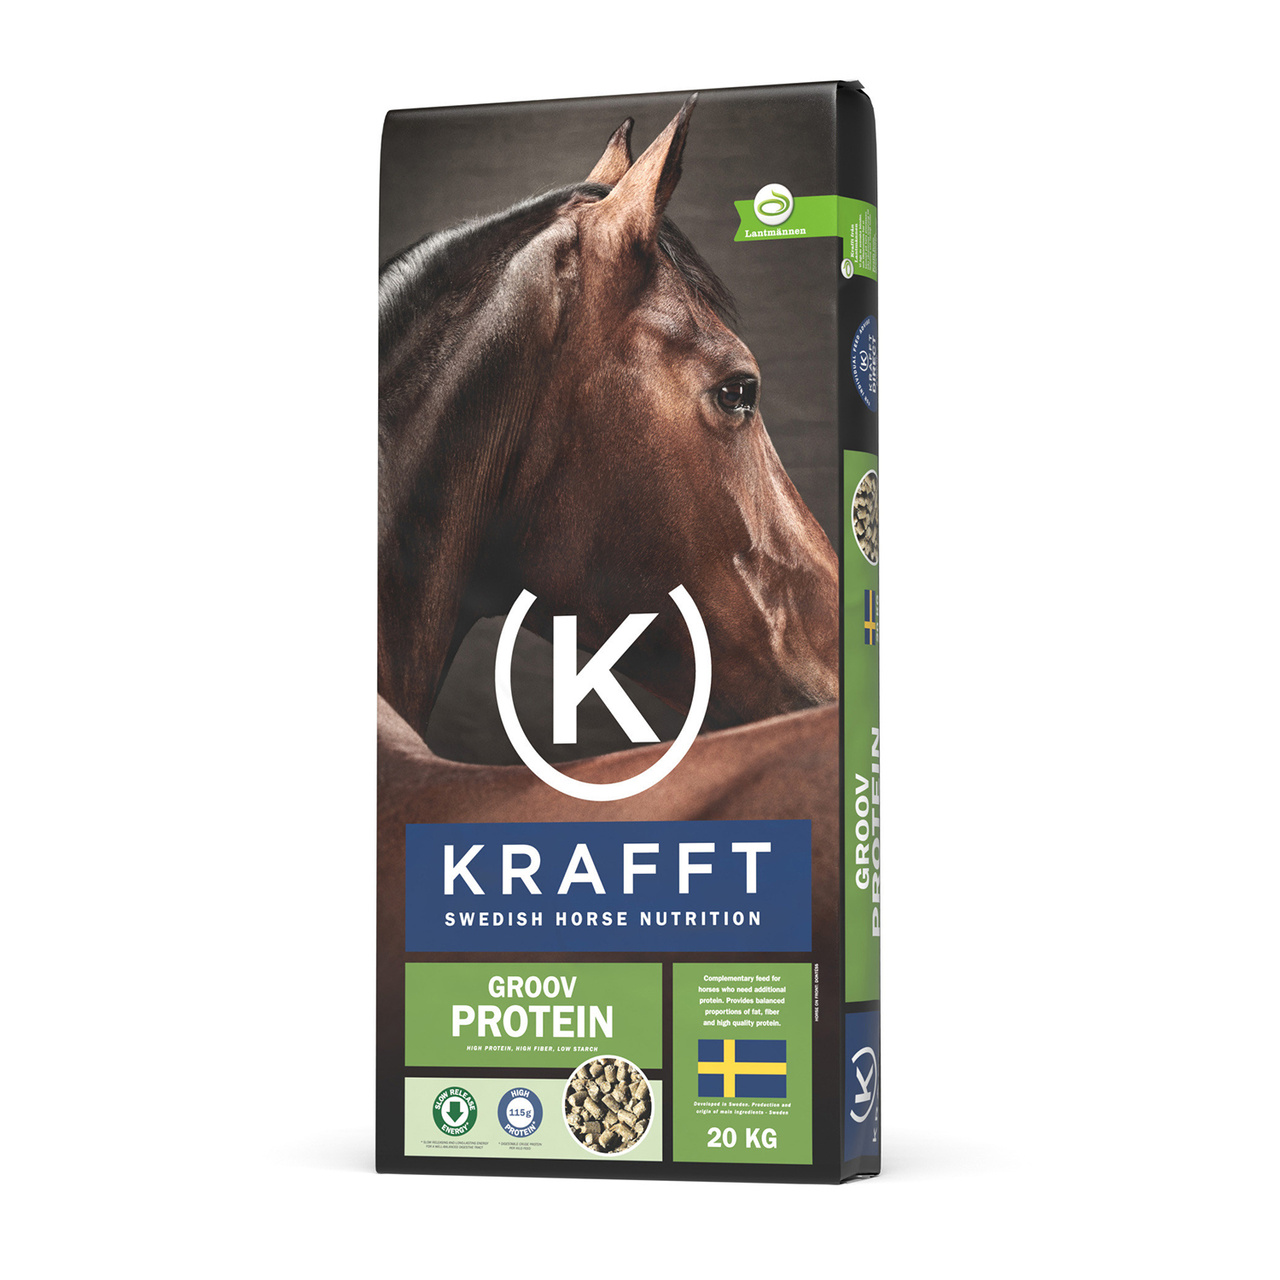 Krafft groov protein 20kg